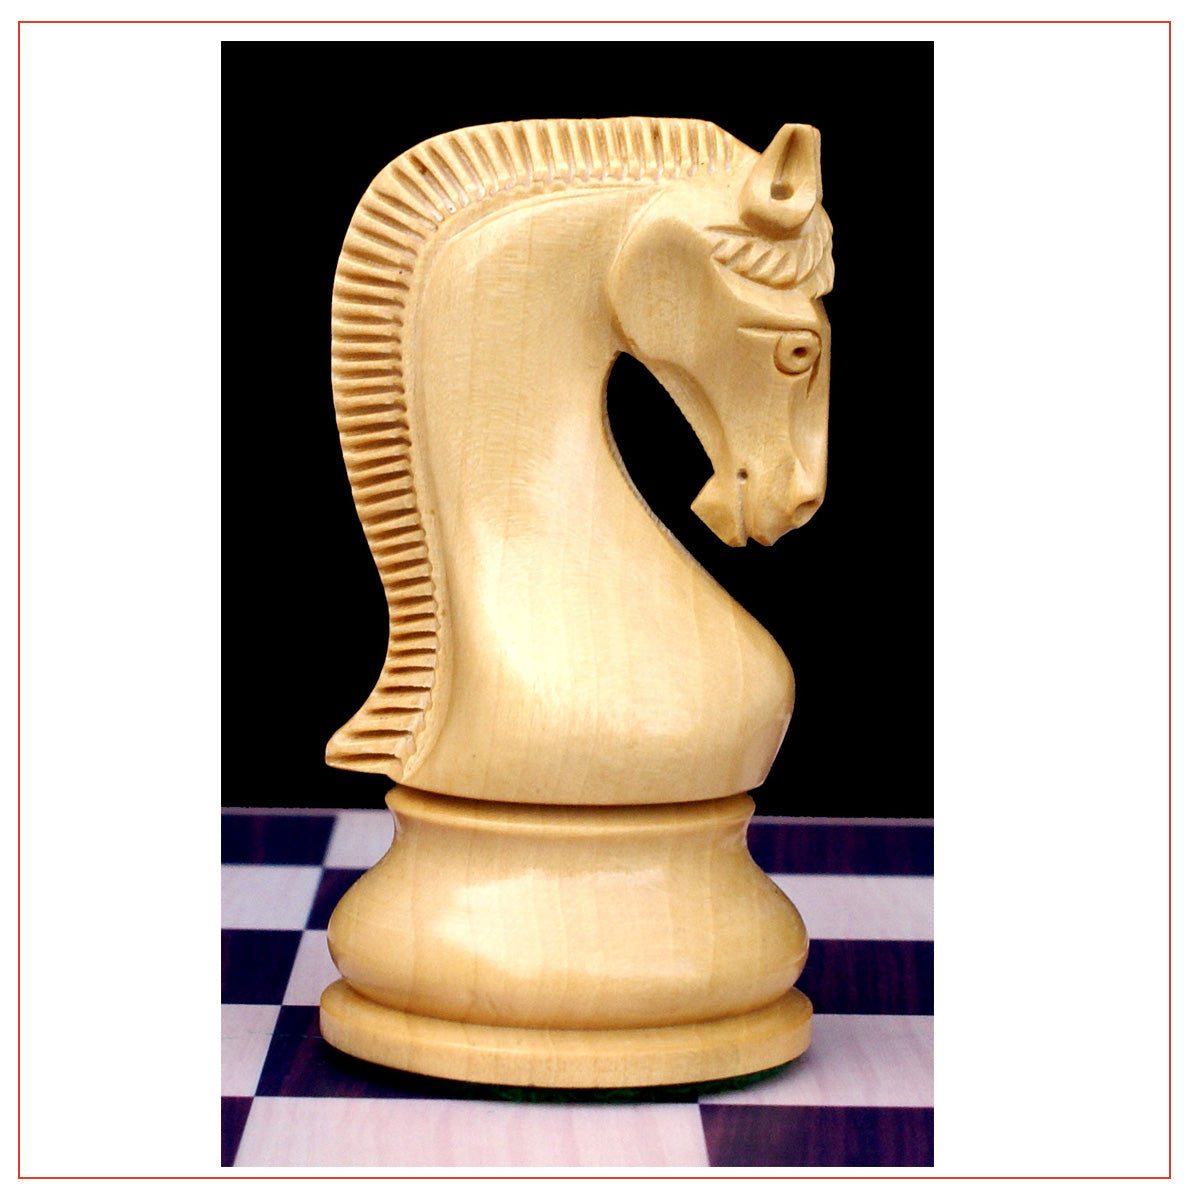 Leningrade Series 4" Ebonised Staunton Chess Set